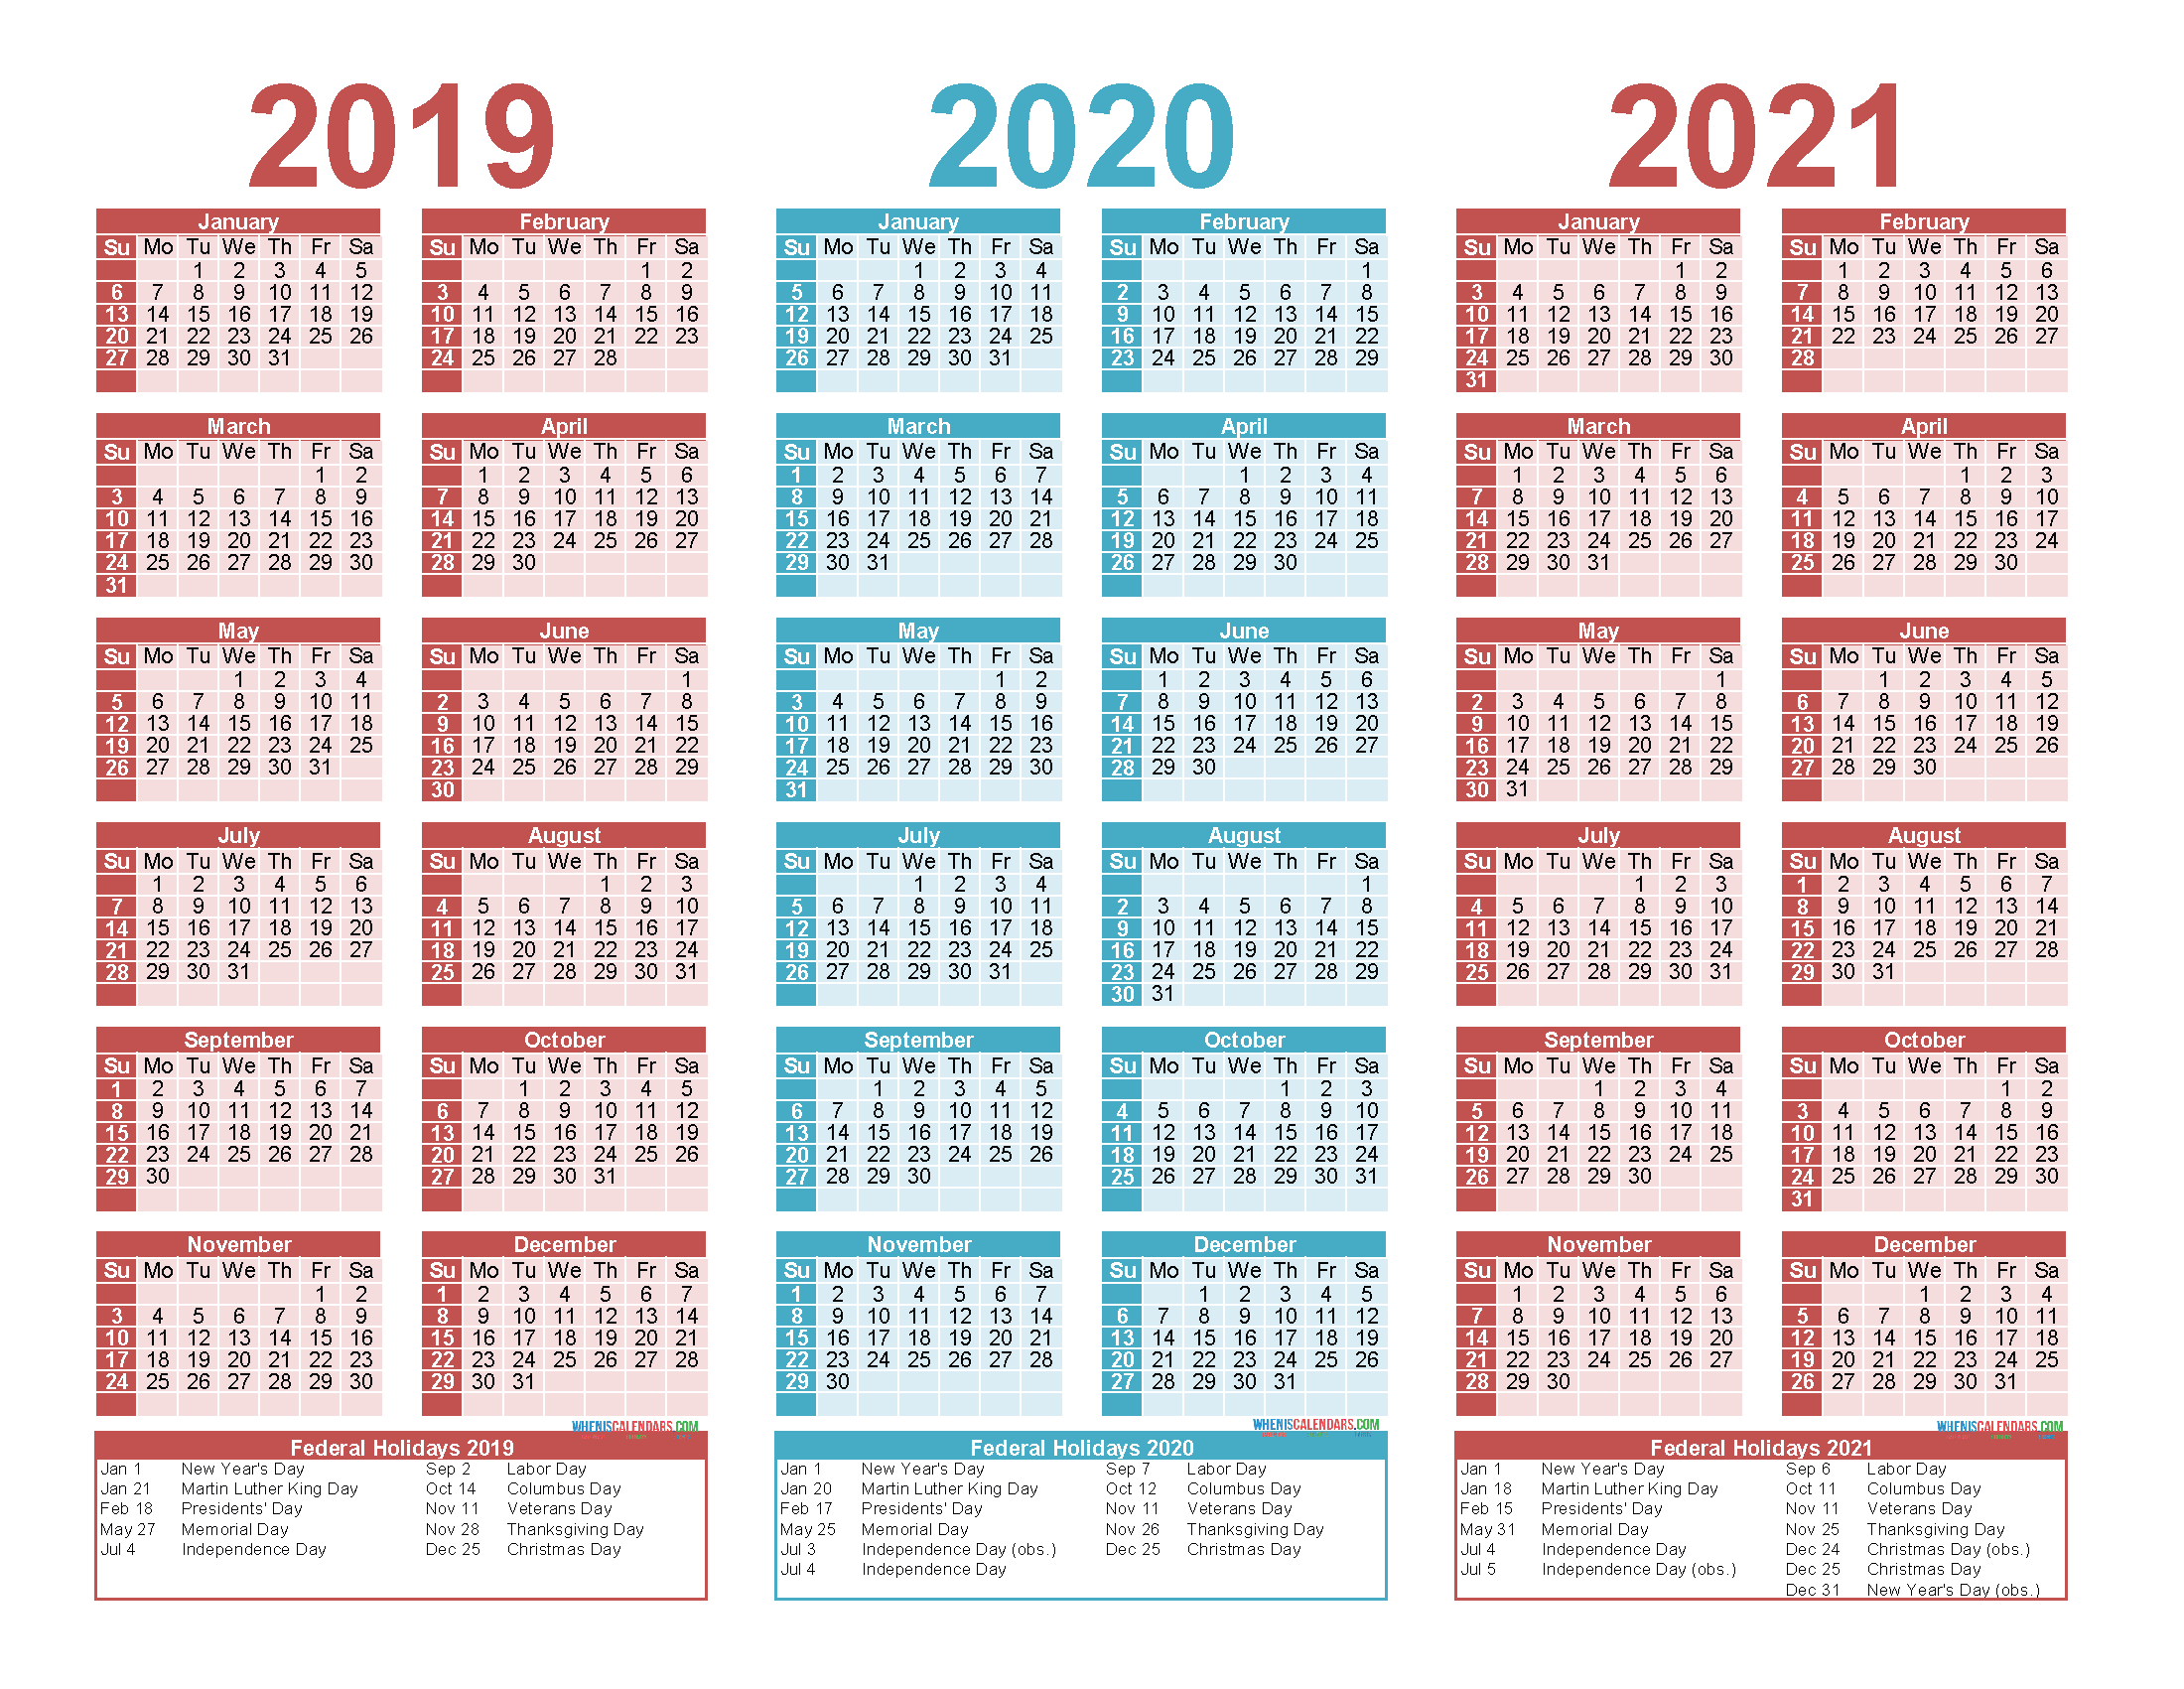 3 Year Calendar Printable 2019 2020 2021 Free Calendar Template